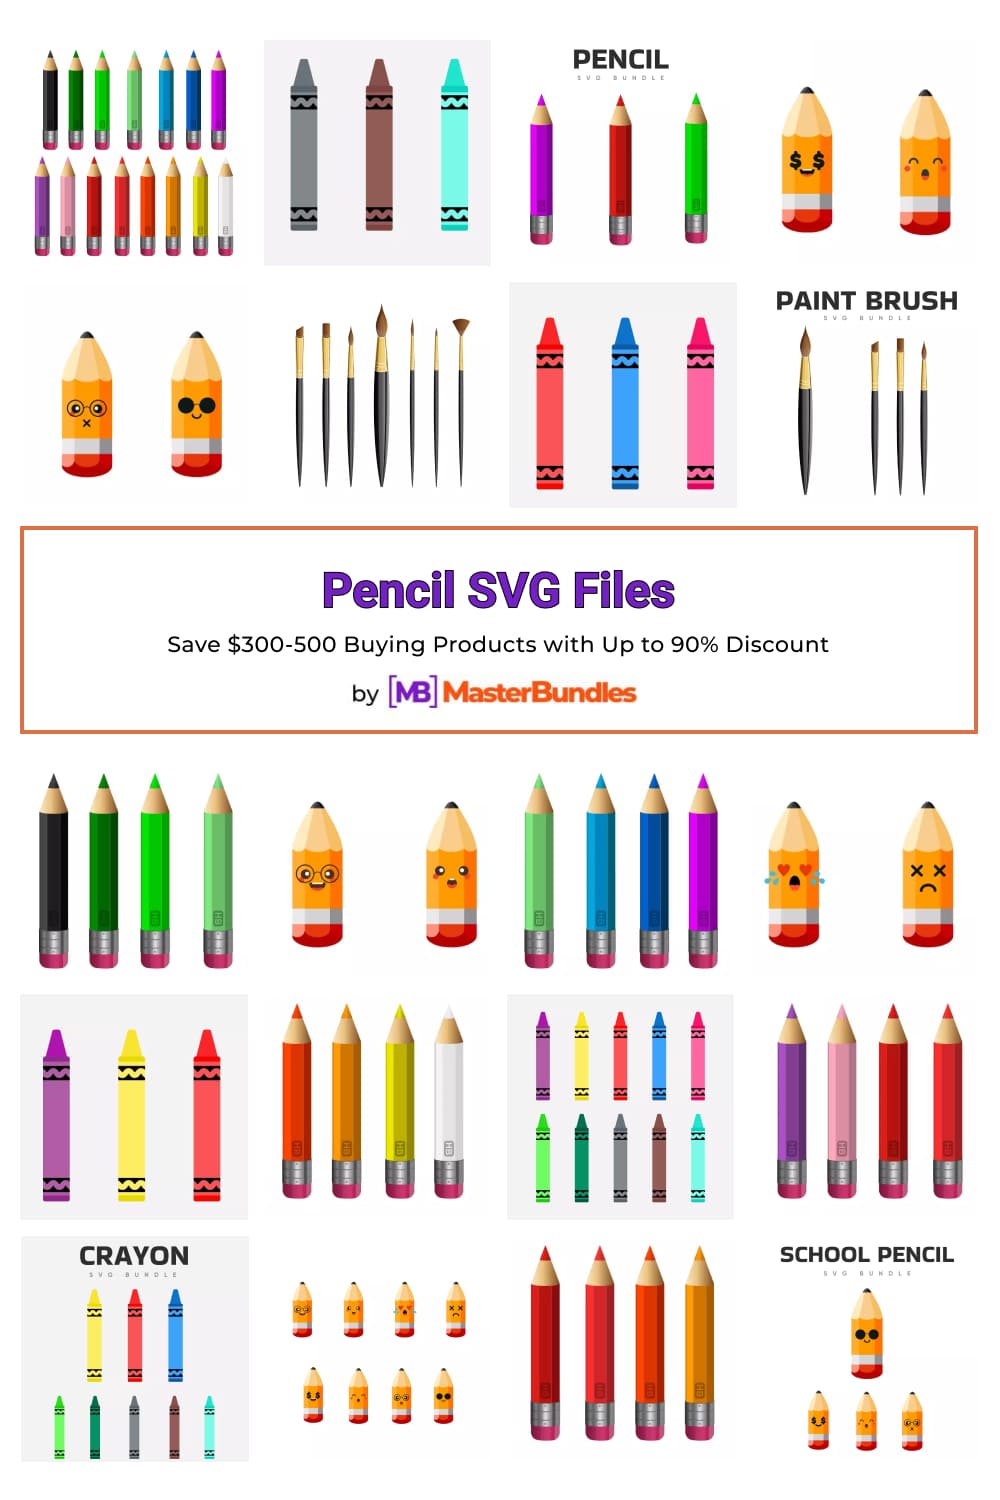 Pencil SVG Files Pinterest image.